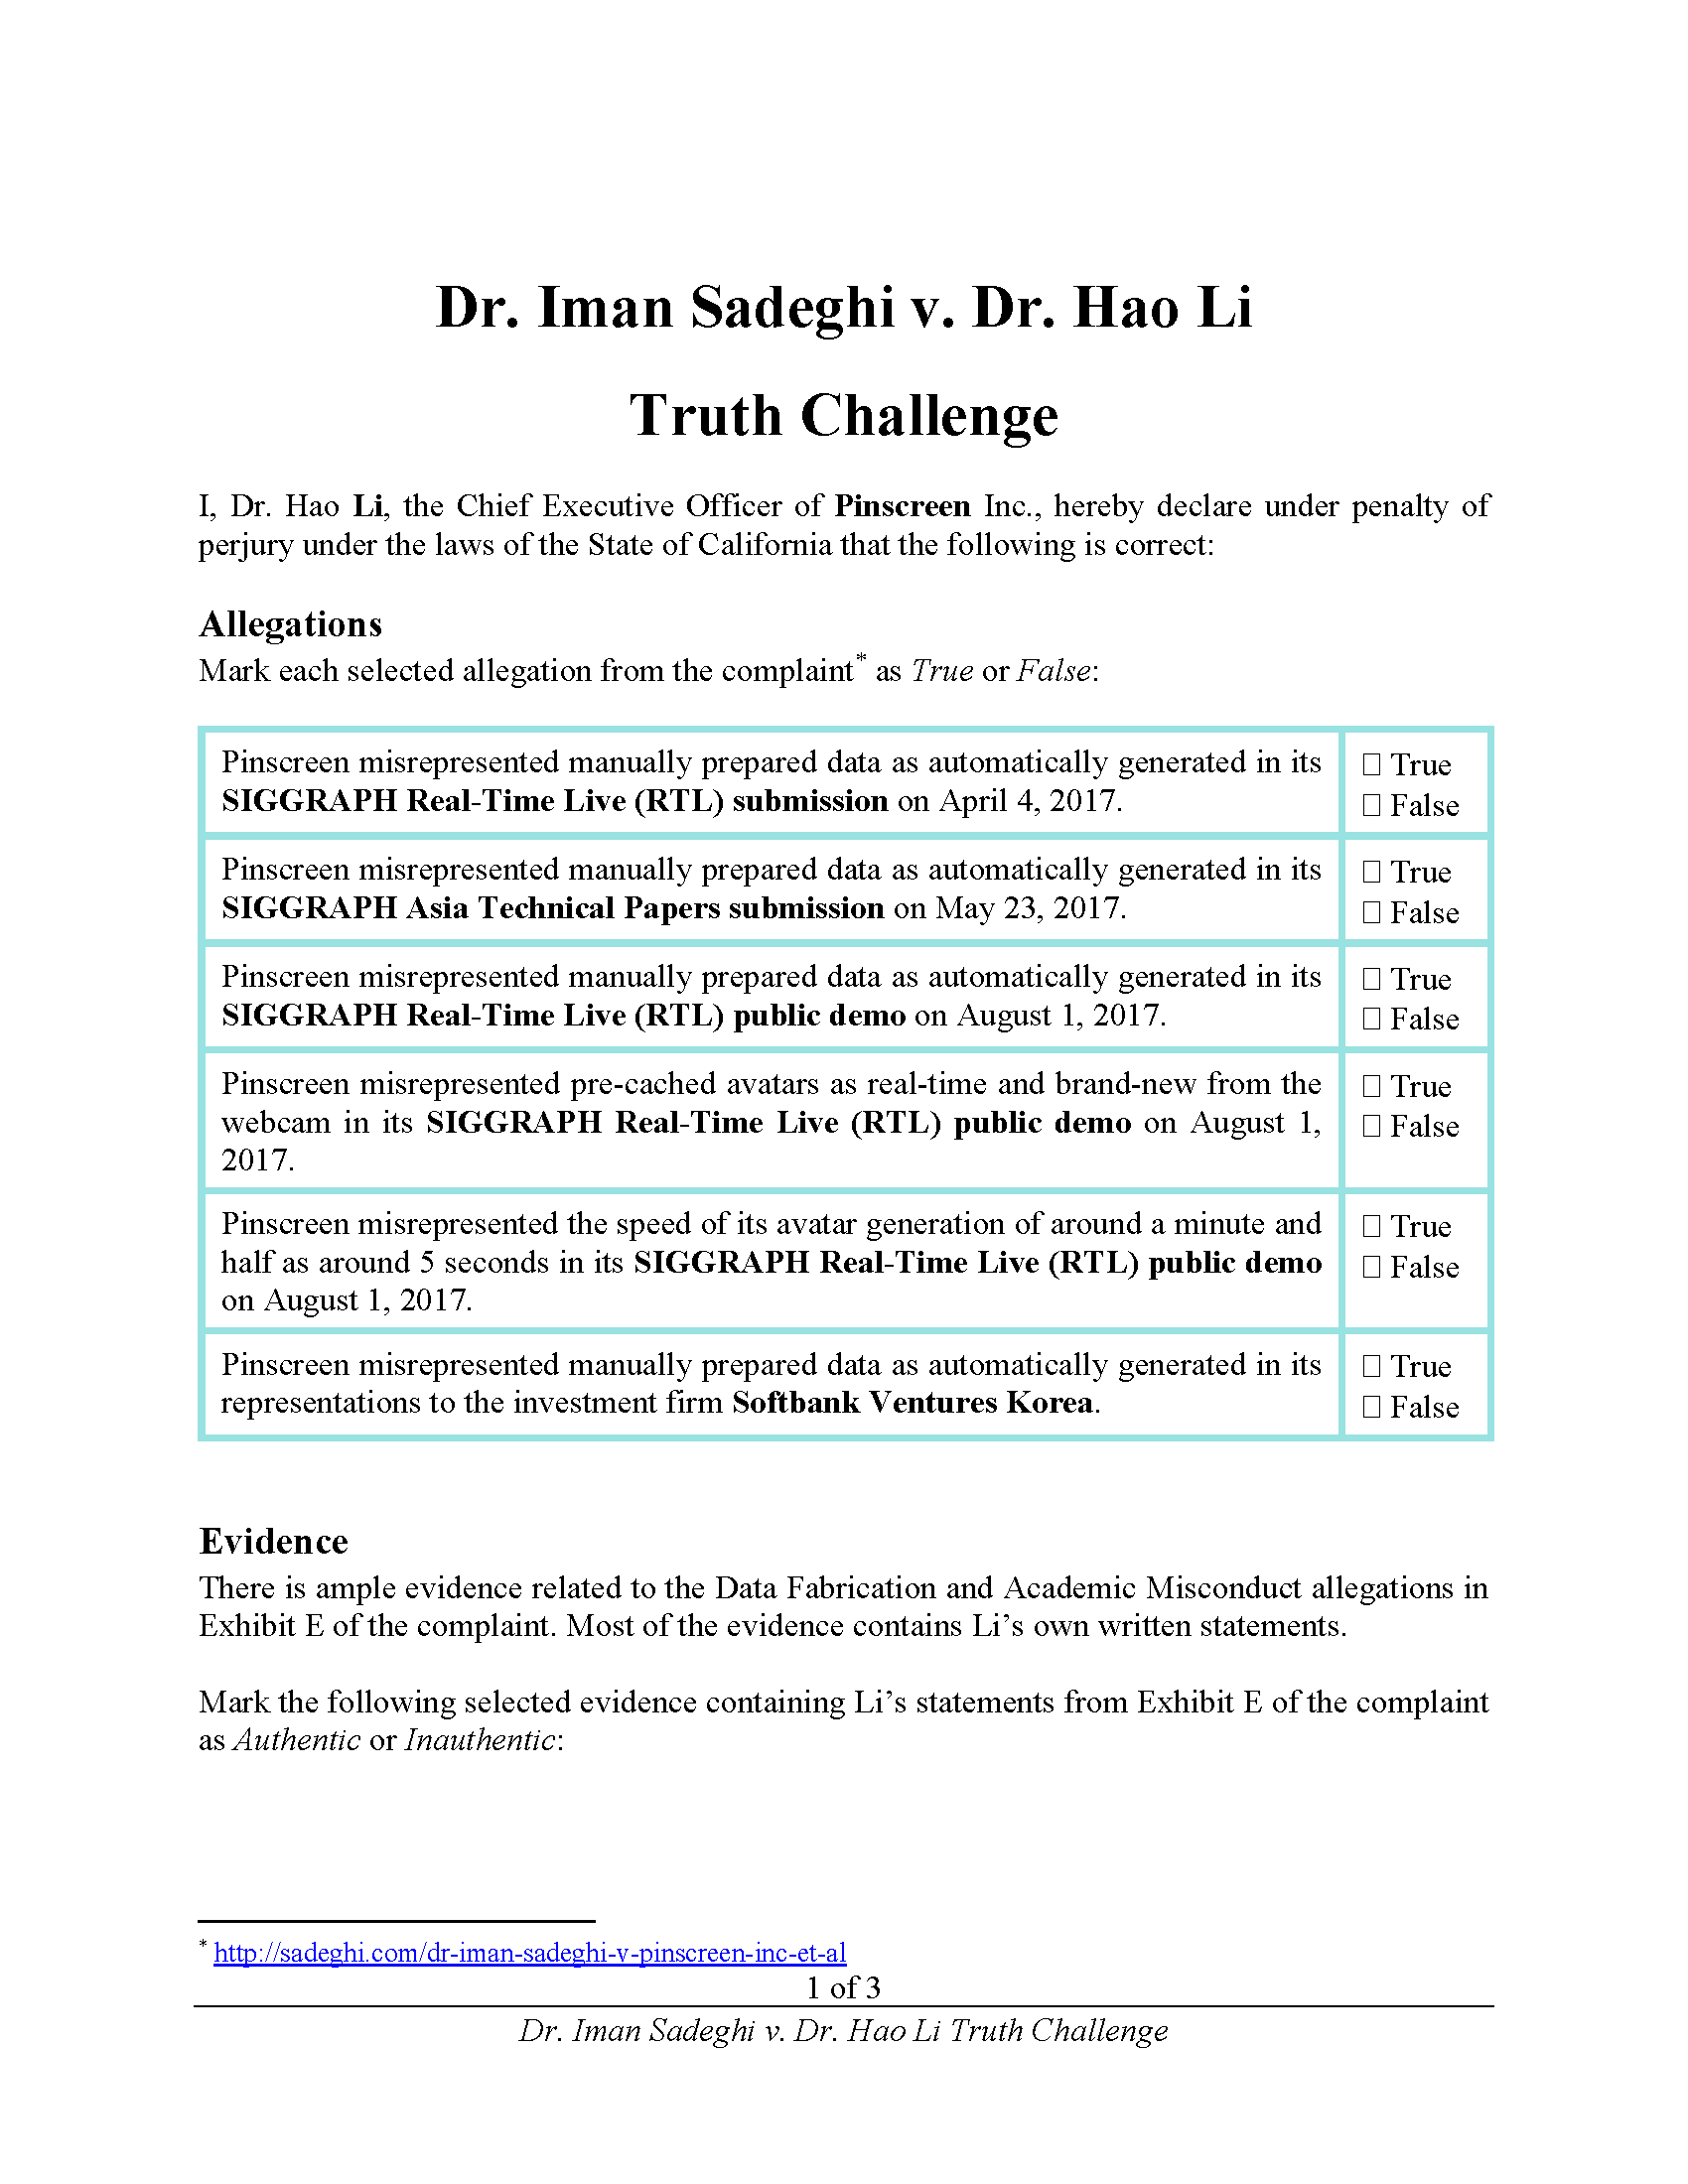 Dr. Iman Sadeghi v. Dr. Hao Li Page 2